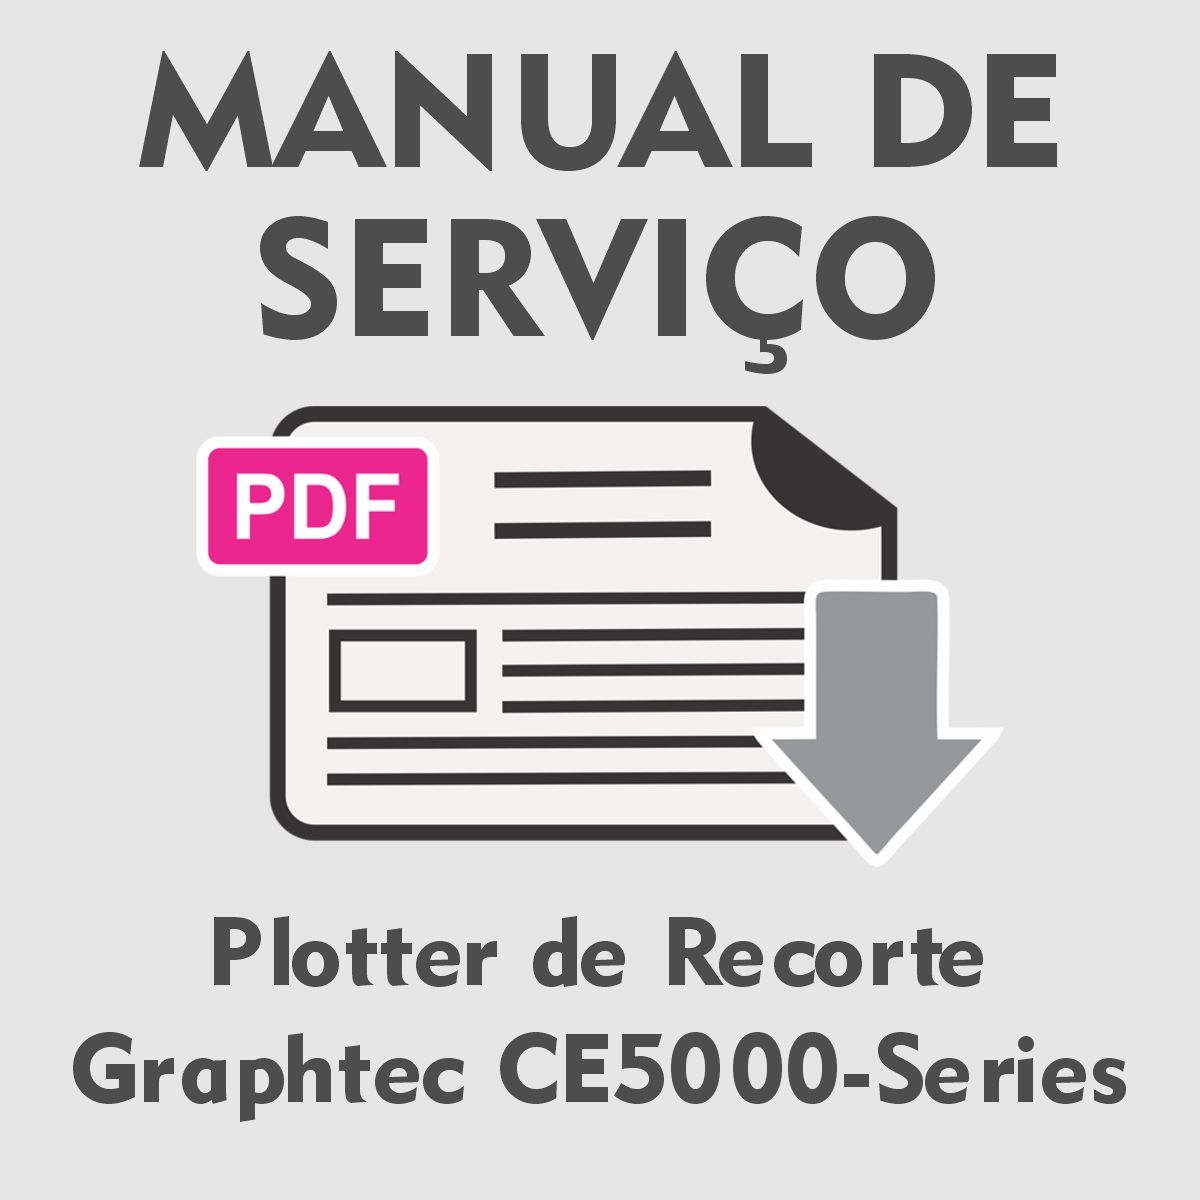 Plotter de Recorte Graphtec CE5000-Series | Manual de Serviço